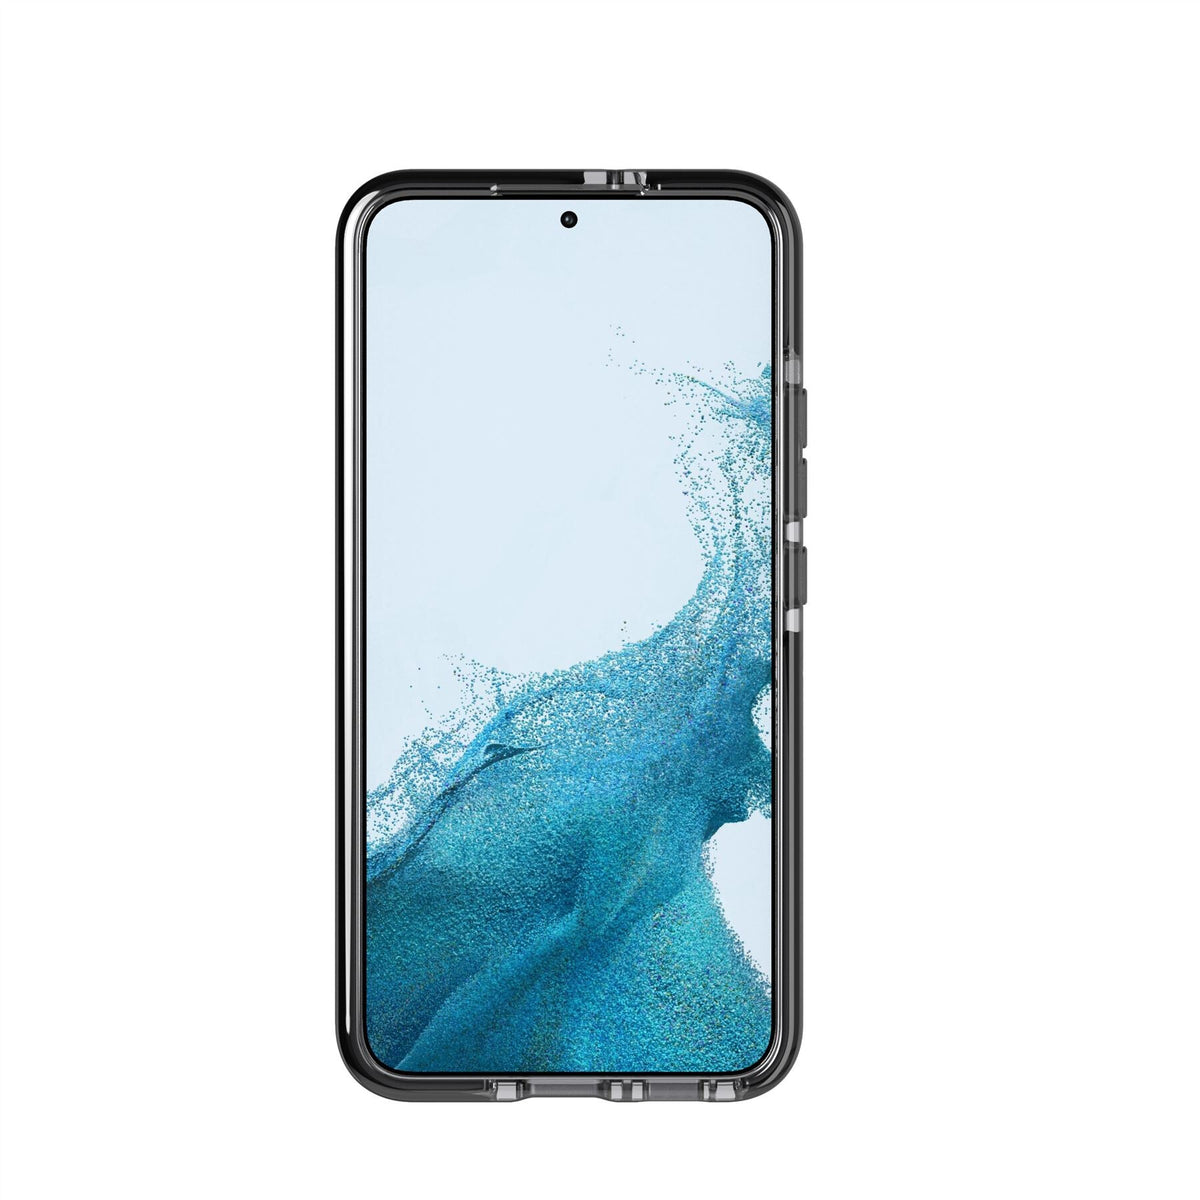 Tech21 Evo Check mobile phone case for Galaxy S22+ in Black